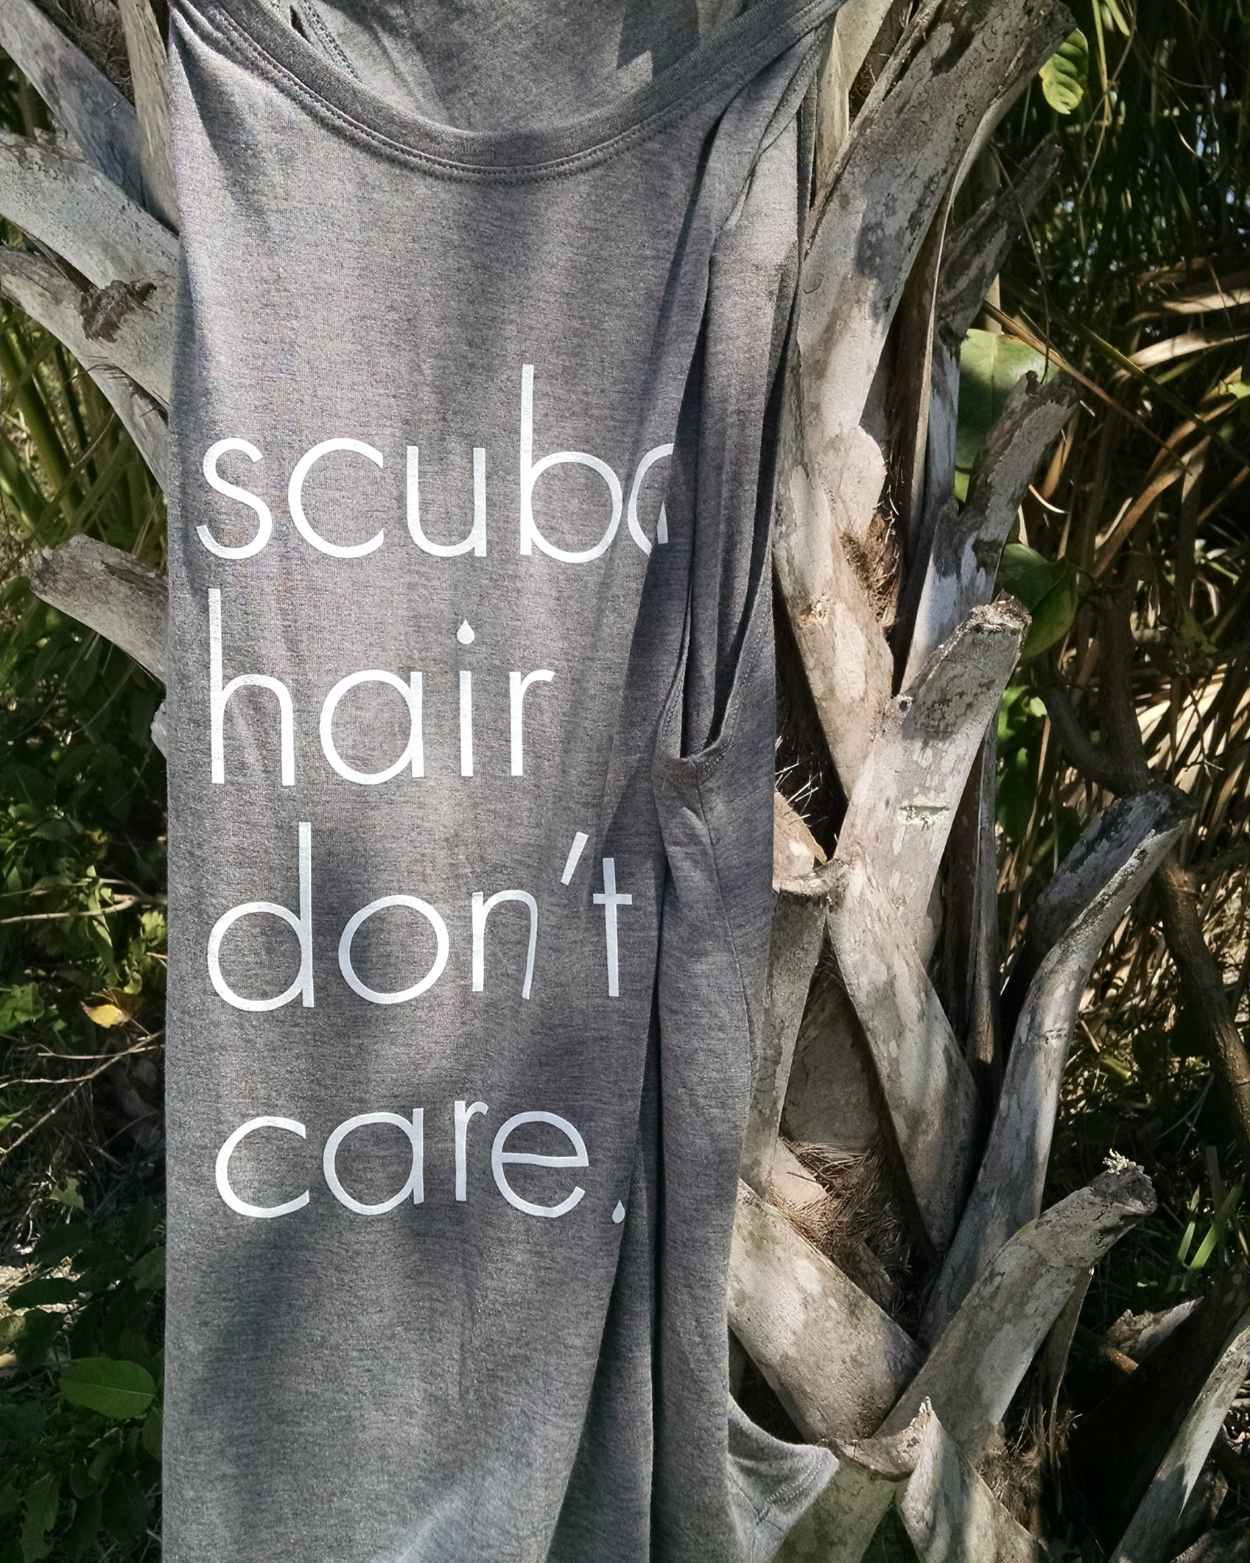 scuba dive hair don't care shirt